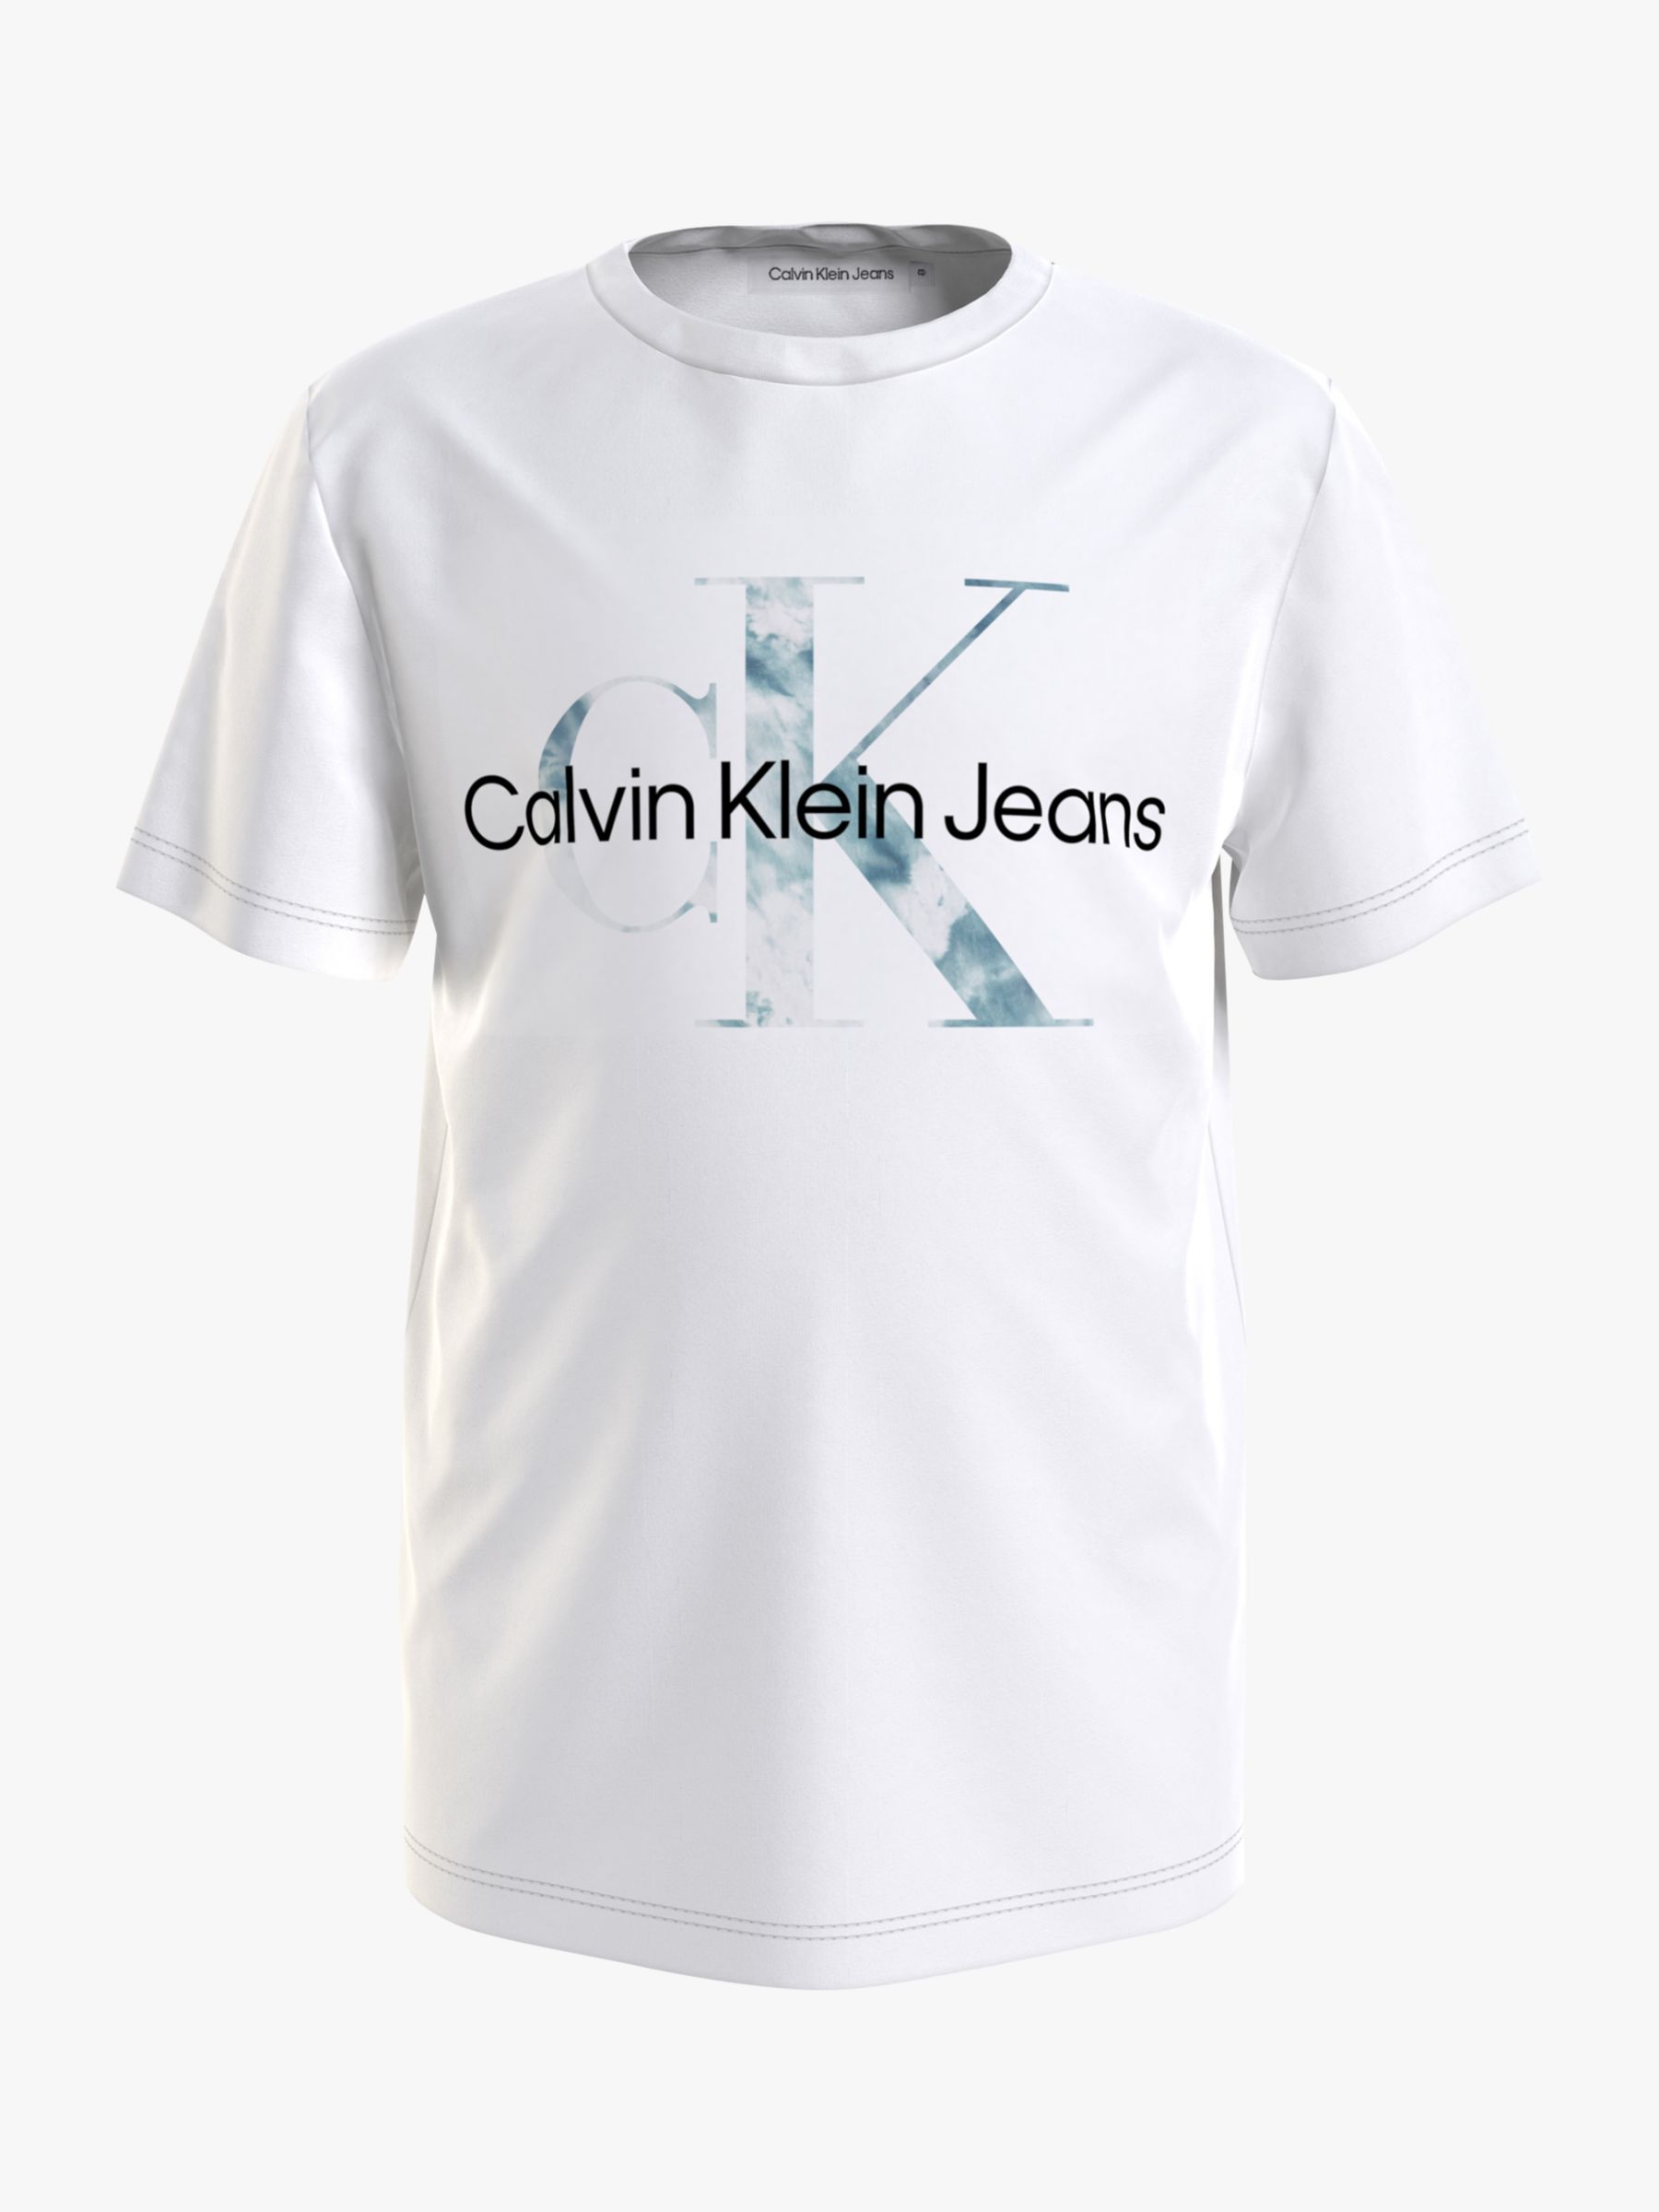 Calvin Klein Kids' Tie Dye Logo Cotton T-Shirt, Bright White, 4 years